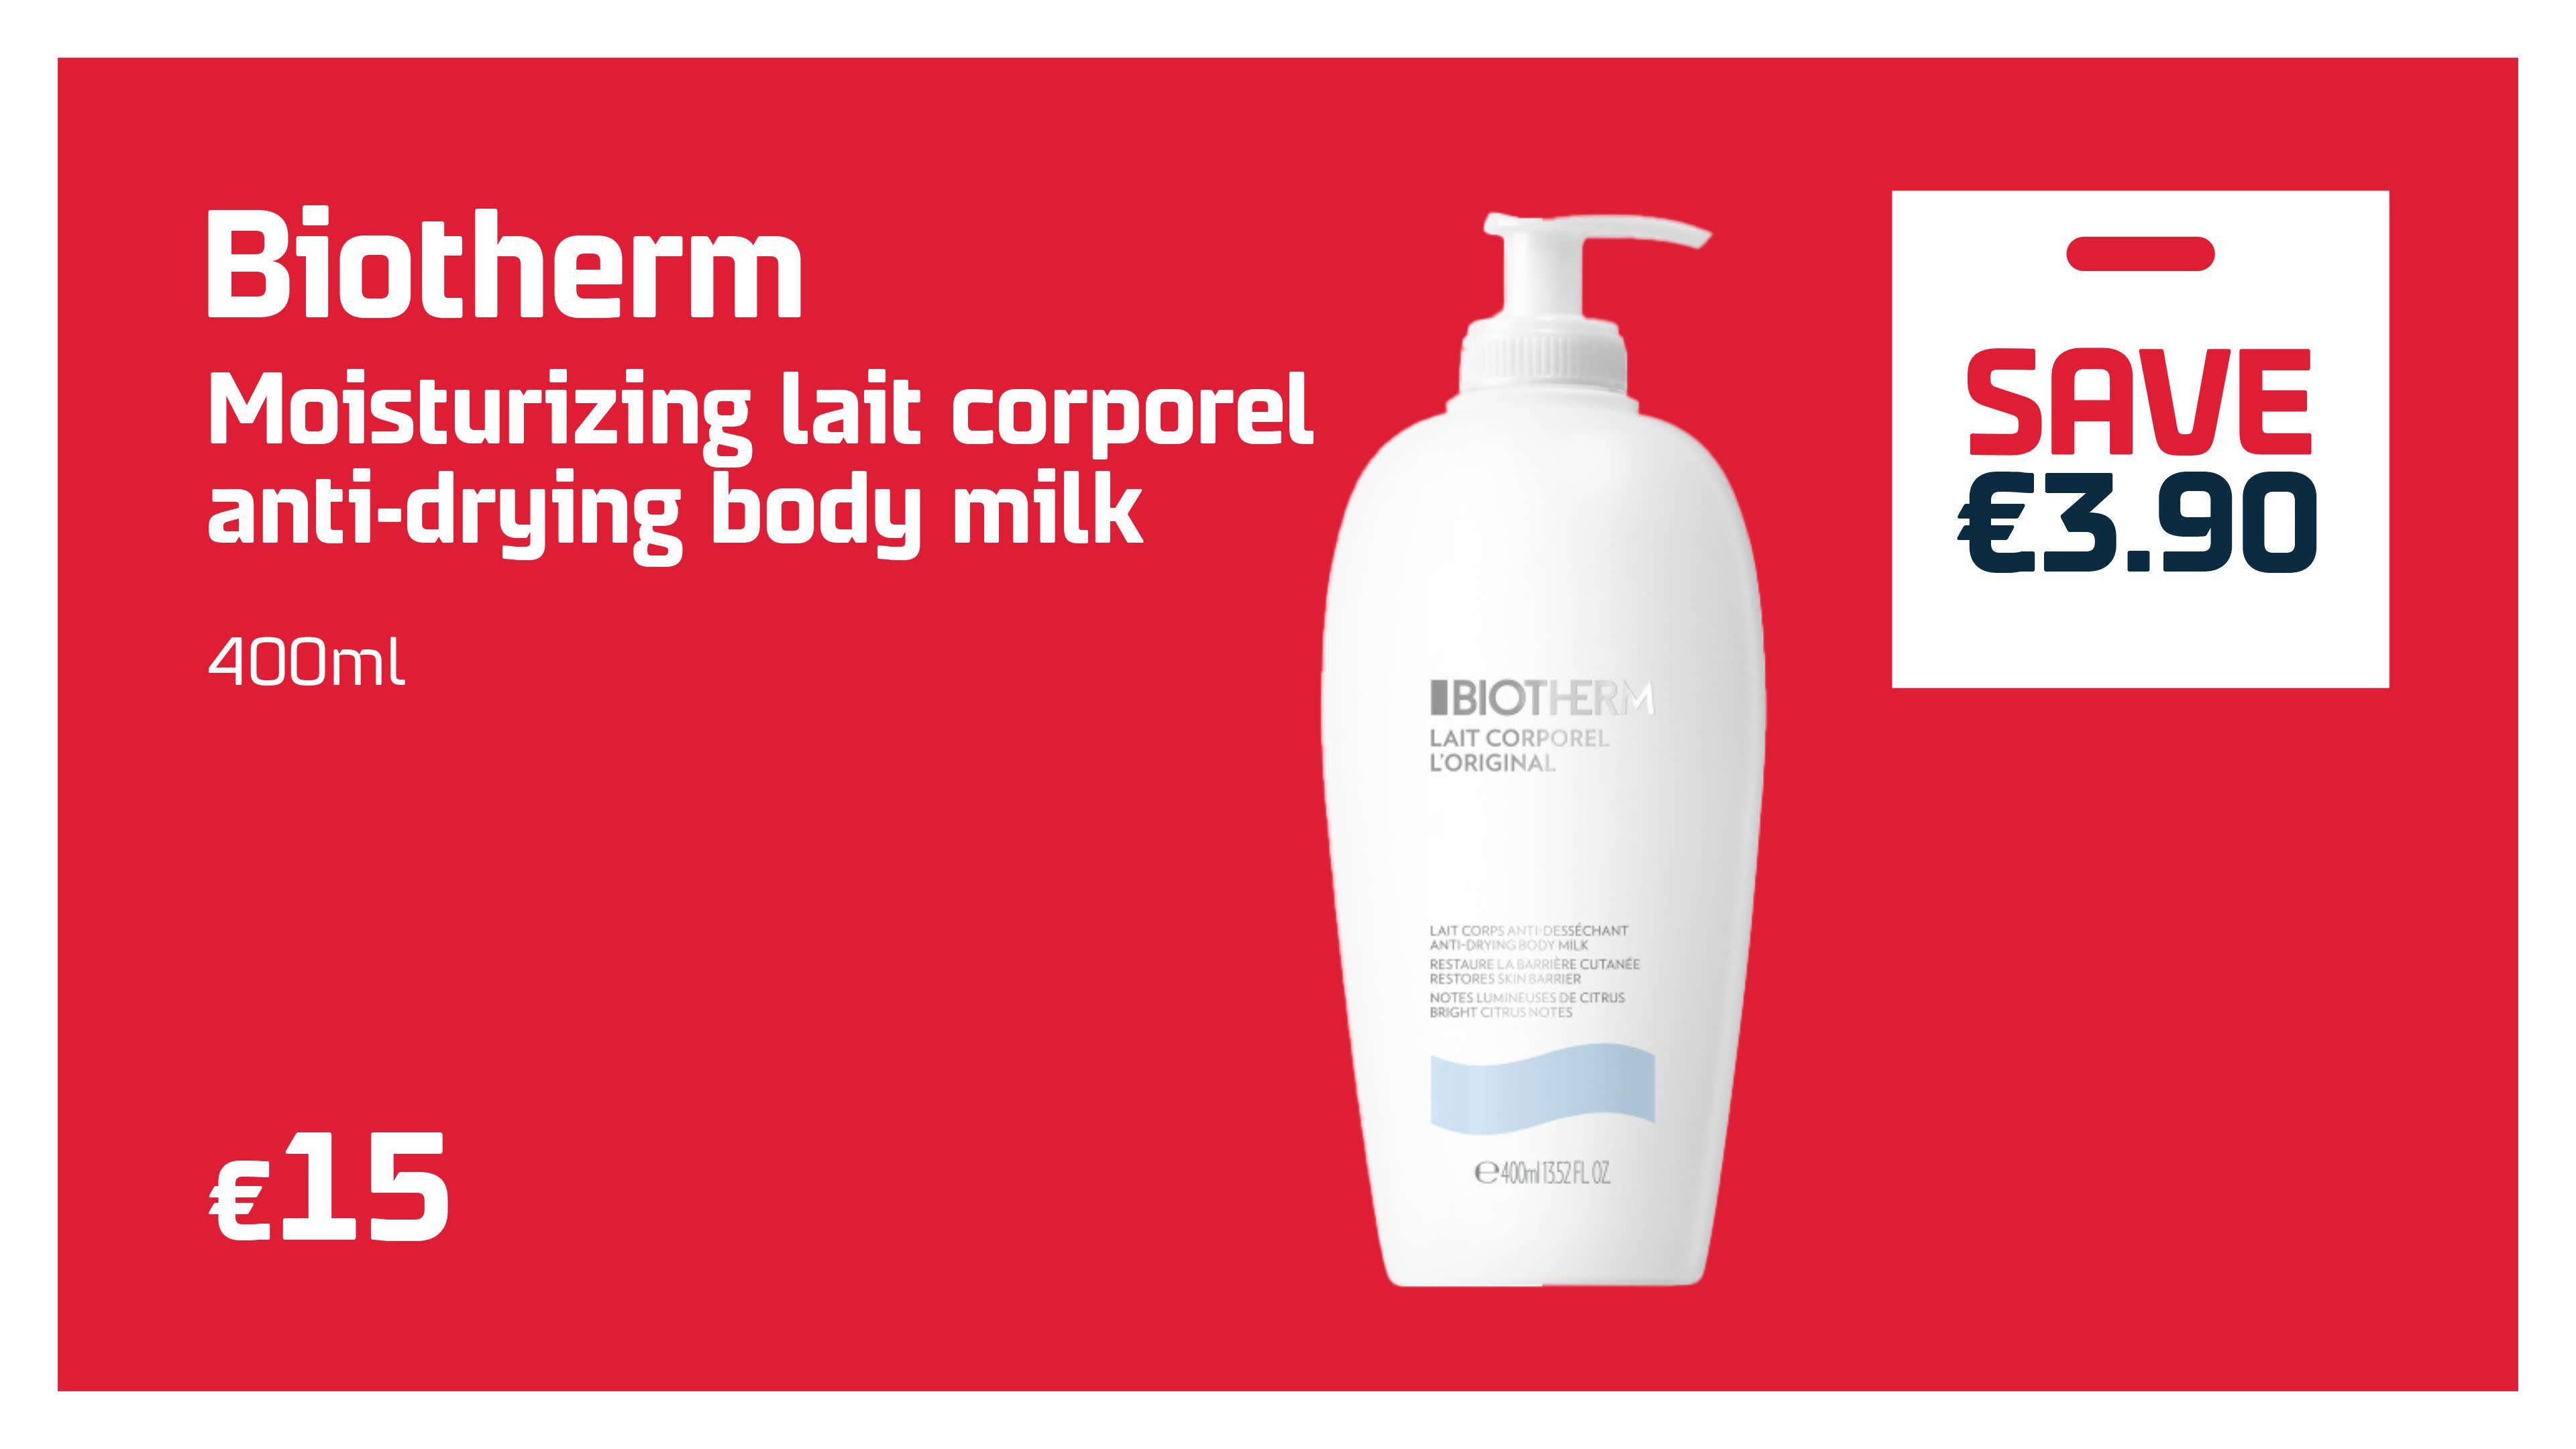 Biotherm milk | Sea Shop offers